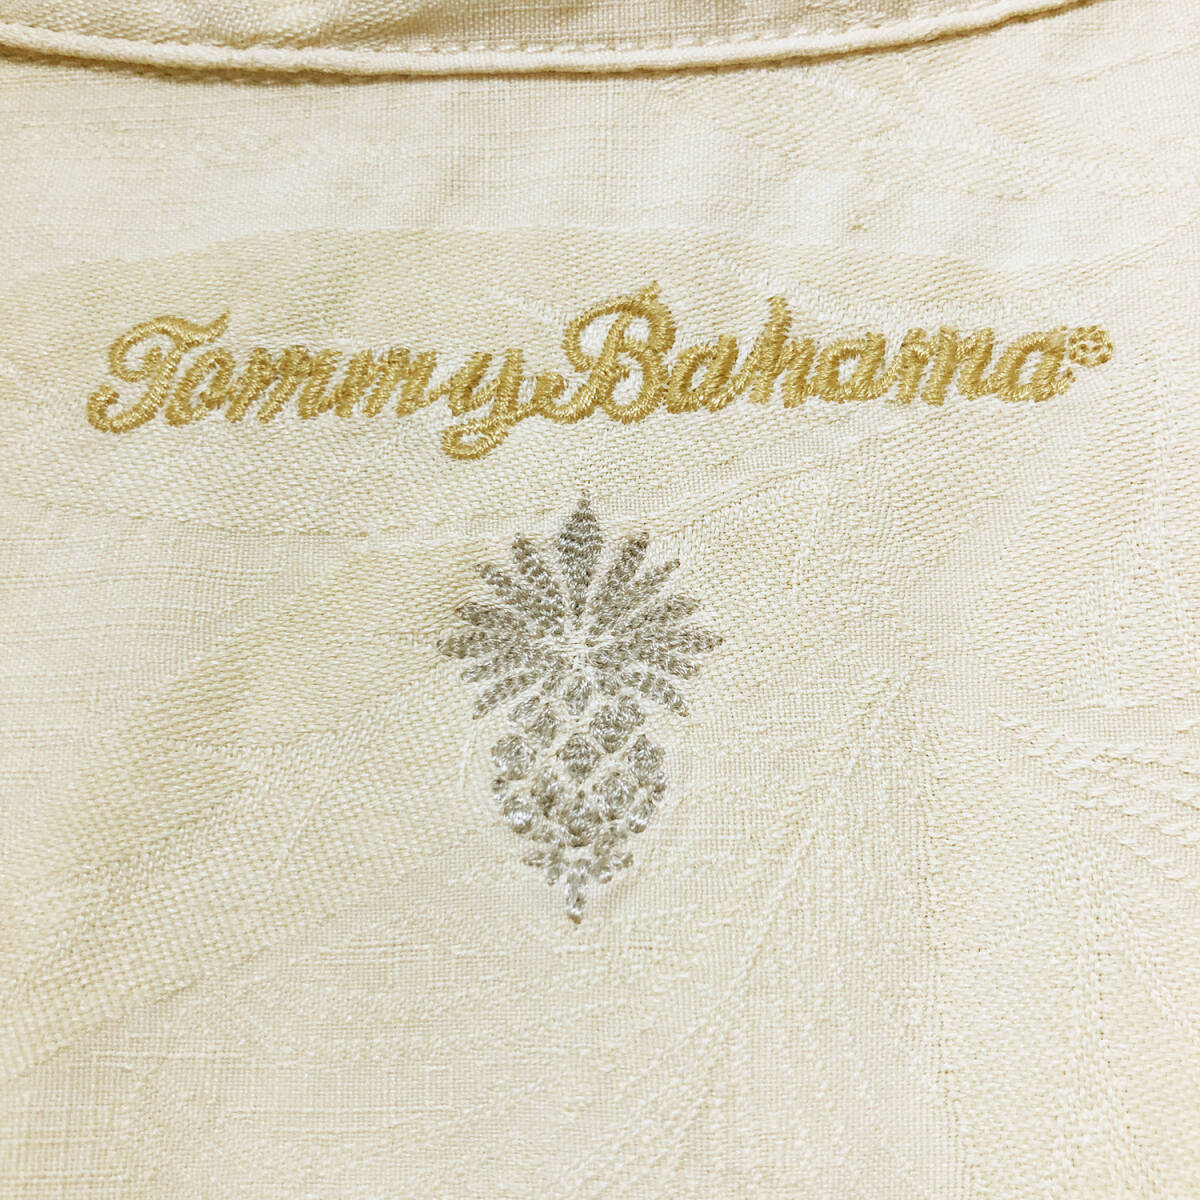 USA 古着 アロハシャツ キャンプシャツ トミーバハマ Tommy Bahama 開襟 シルク 刺繍 ジャガード メンズL イエロー BF1918